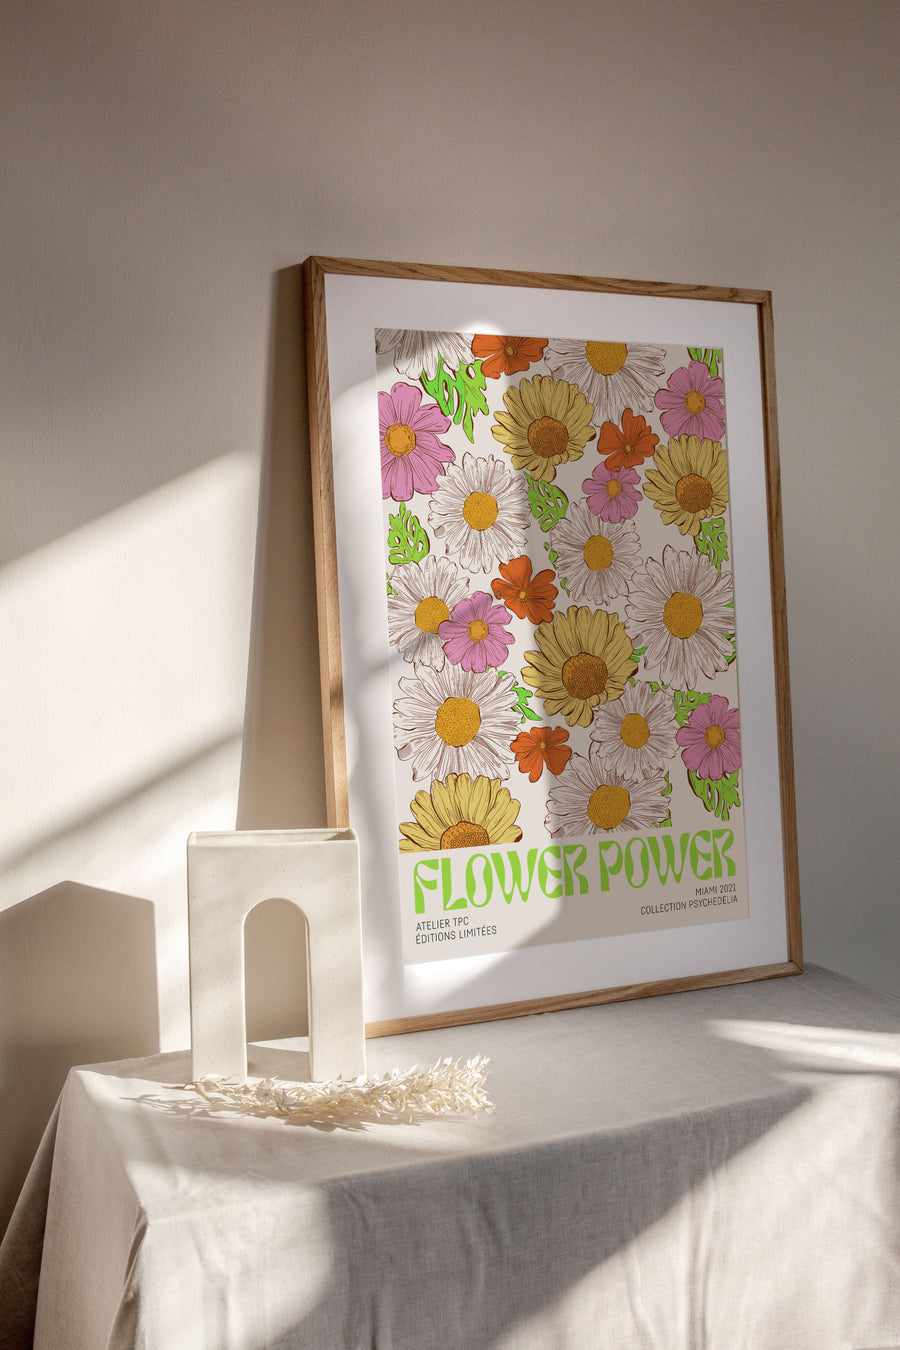 Flower Power 70s floral art print the printable concept